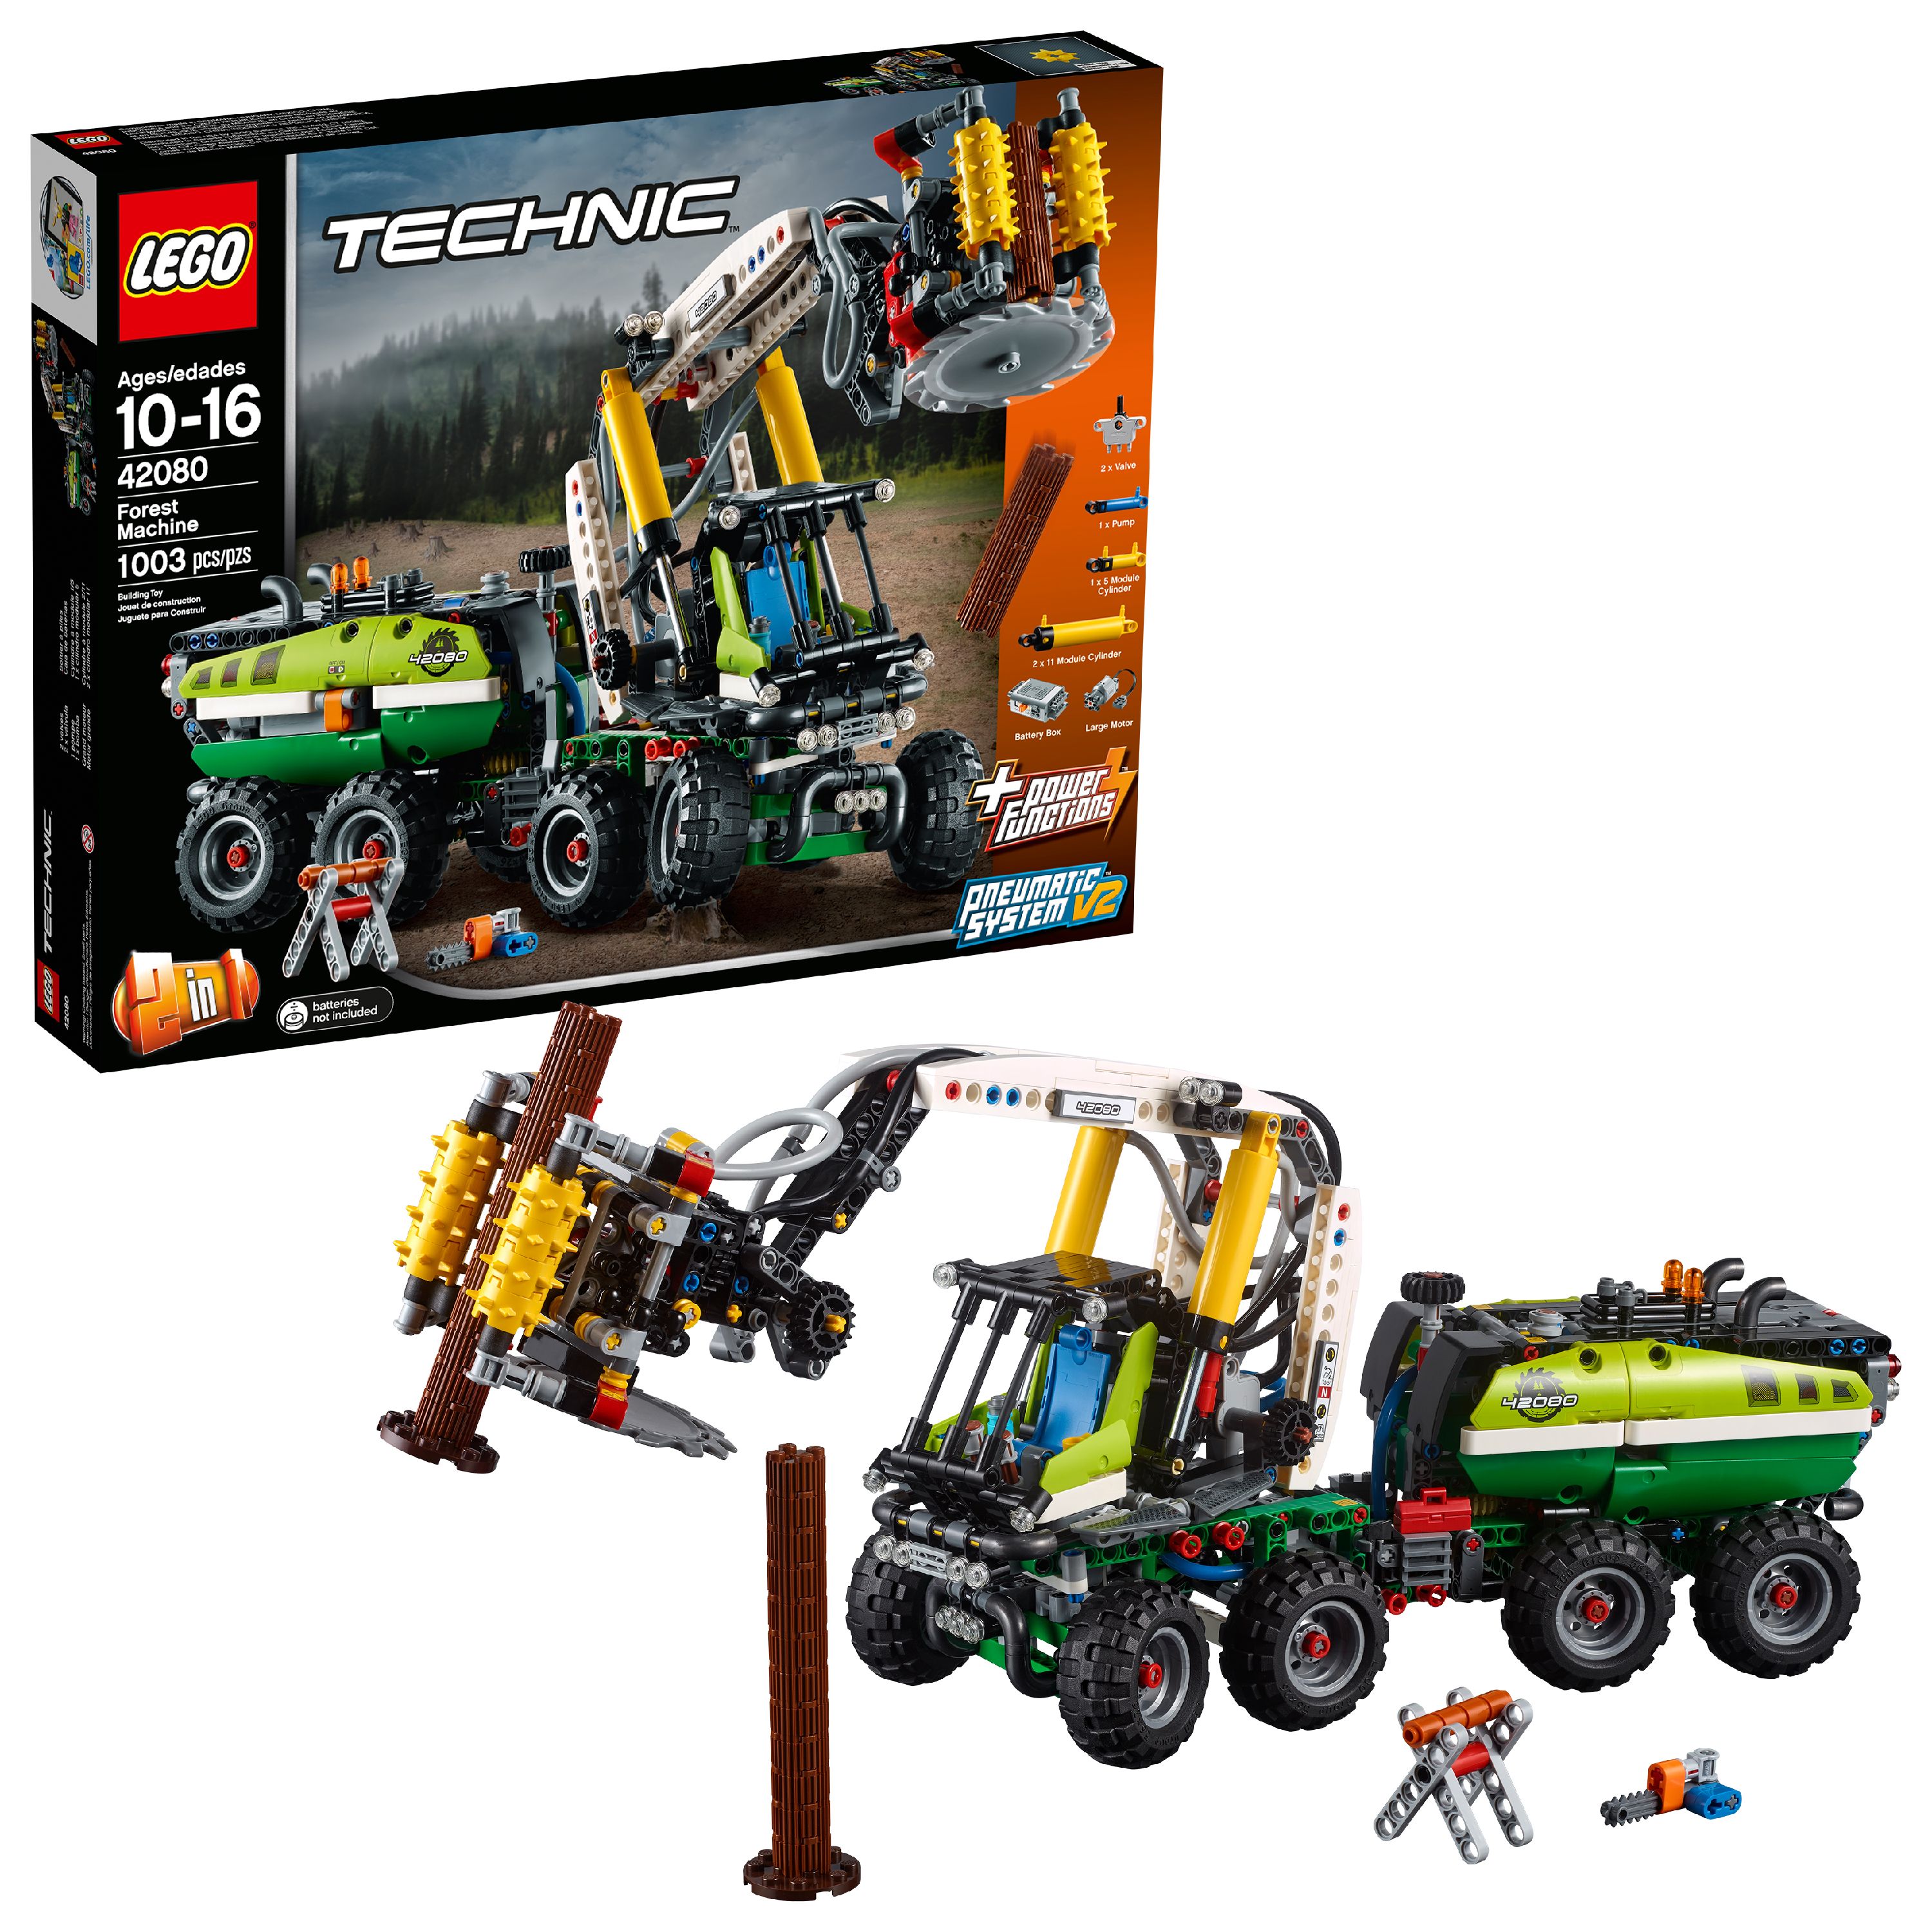 LEGO Technic Forest Machine 42080 - image 1 of 7